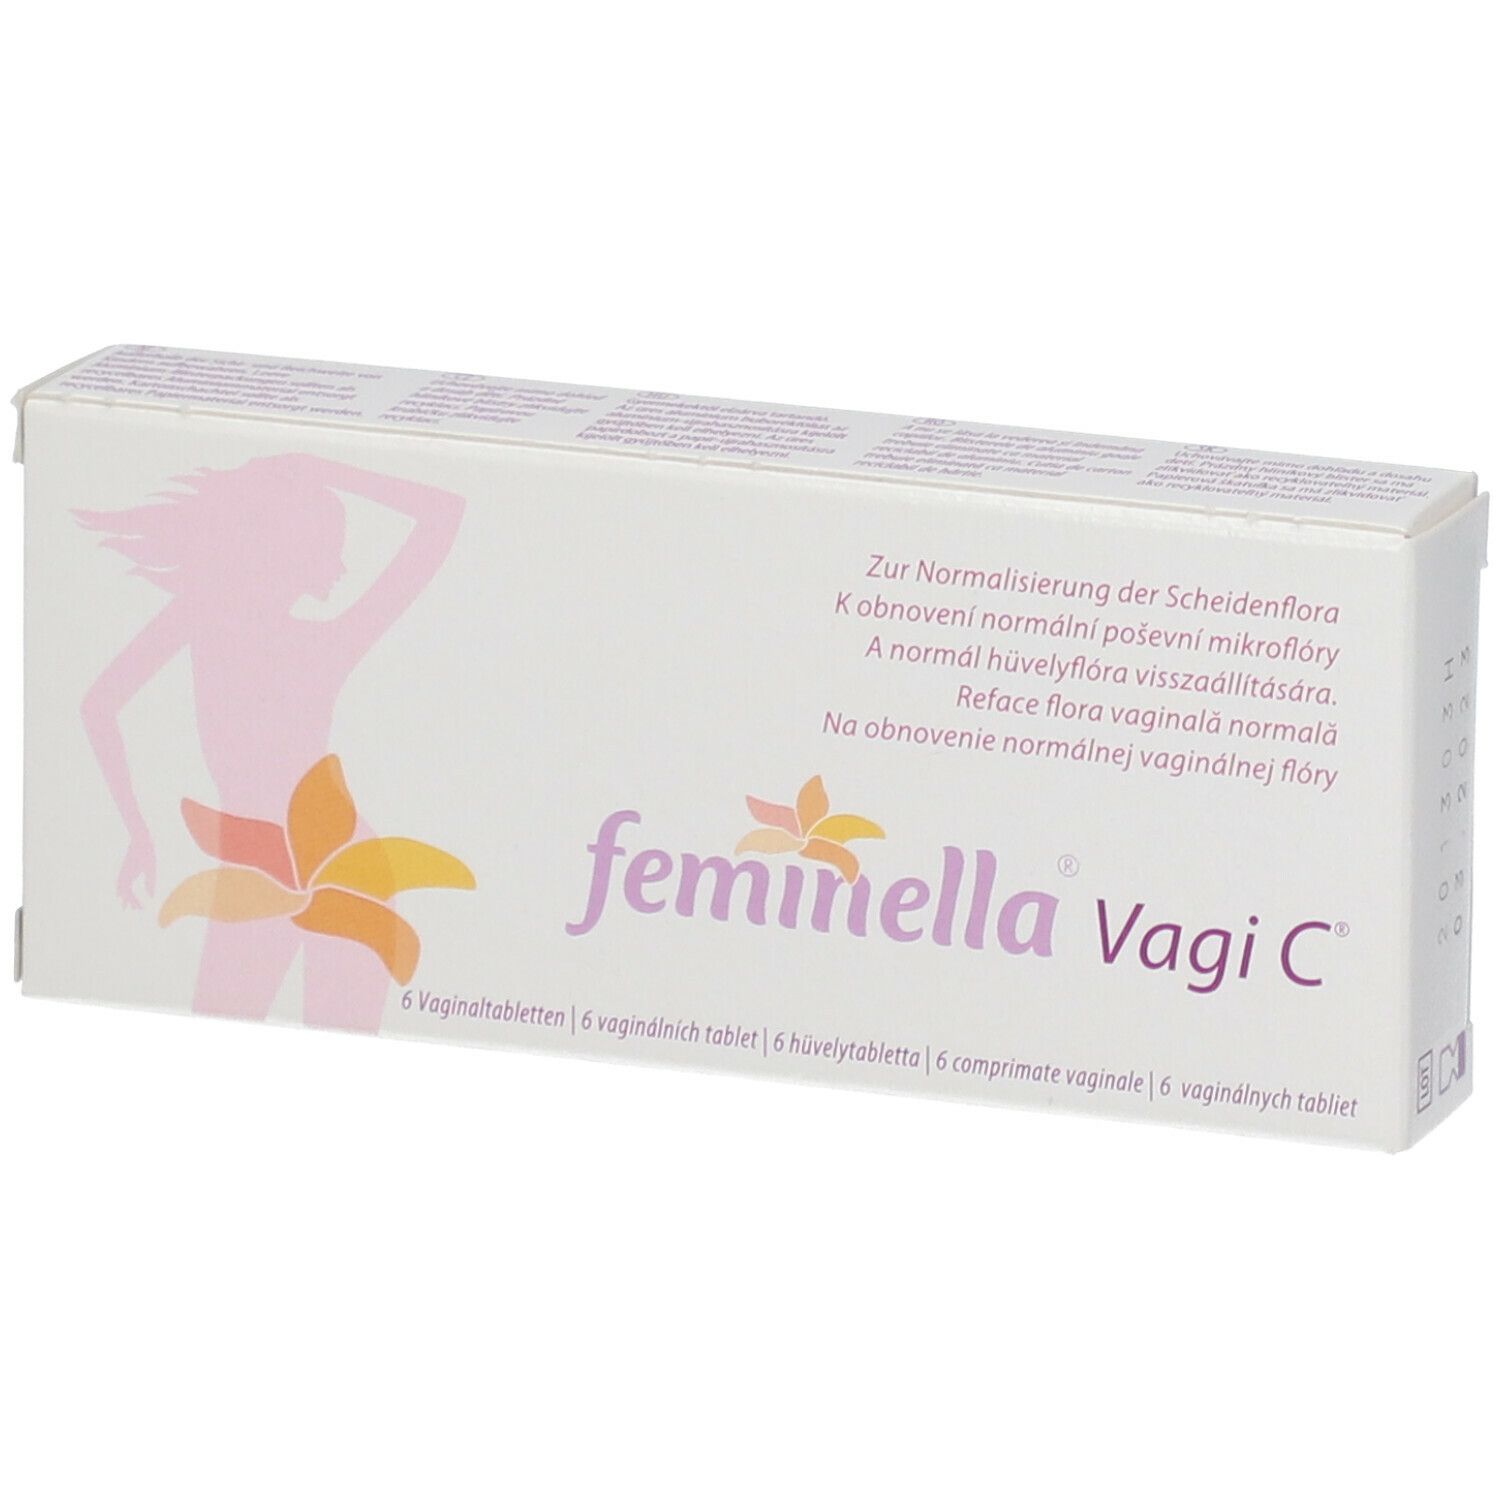 feminella® Vagi C®